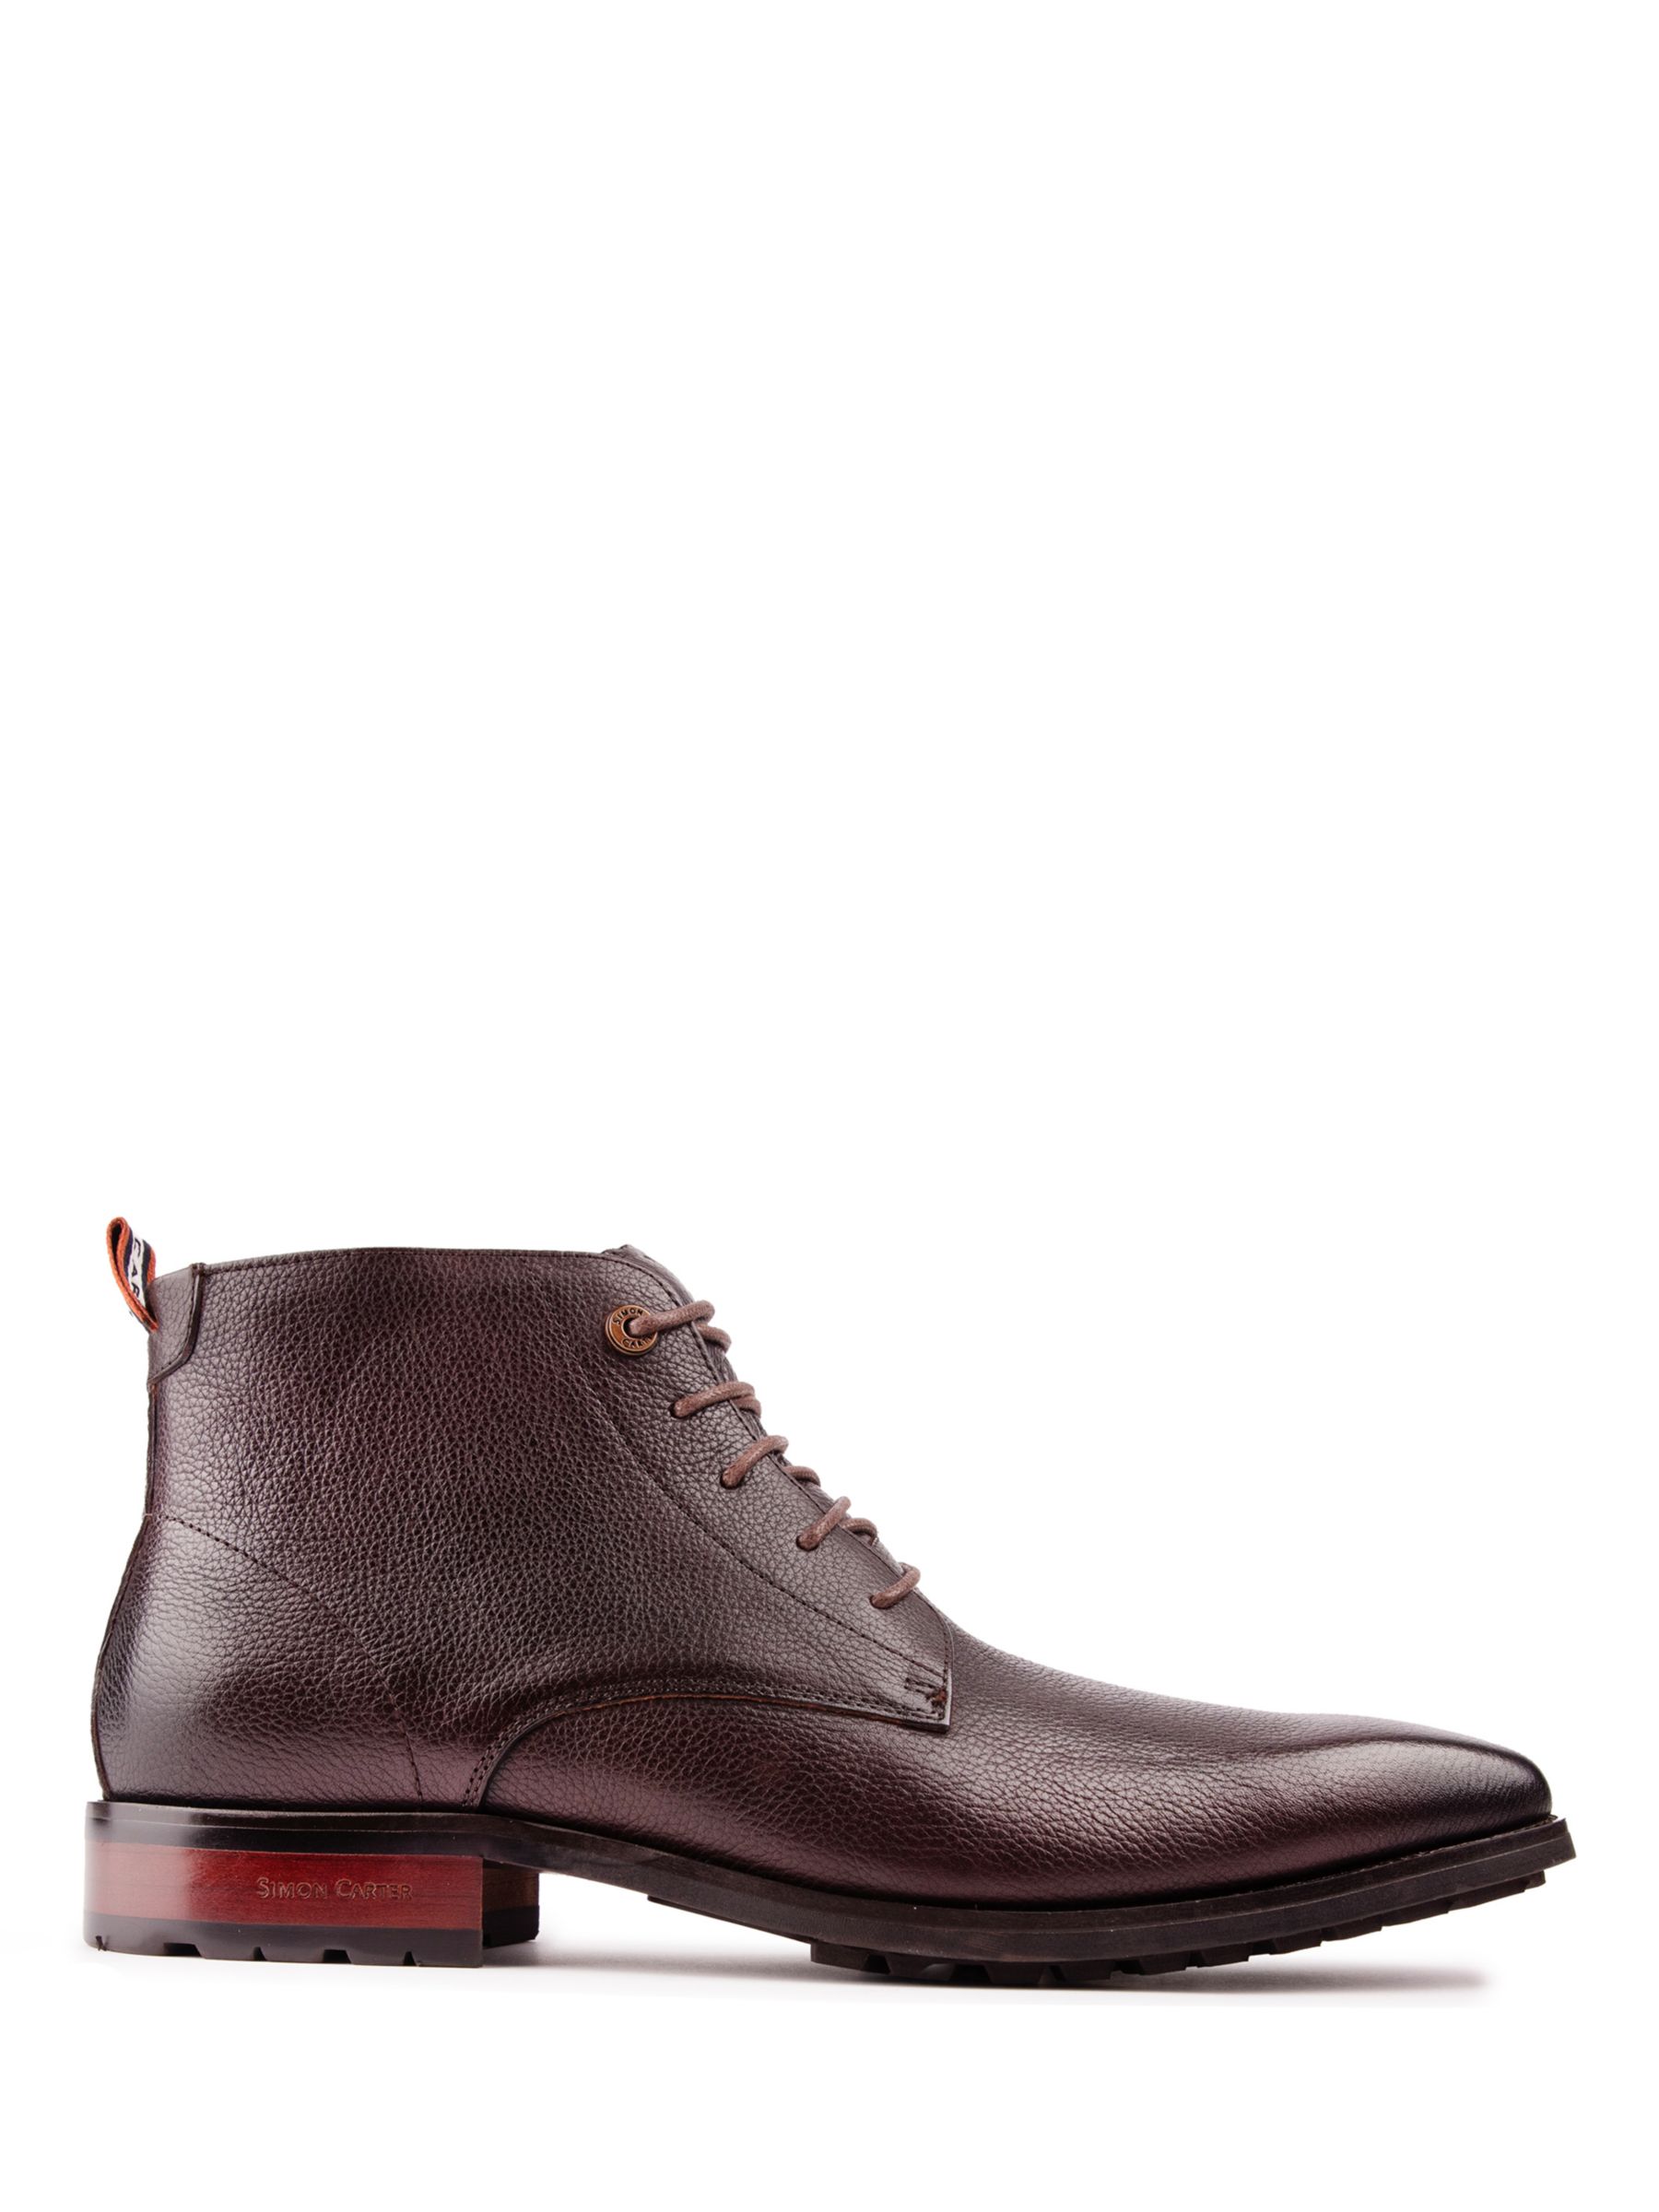 Simon Carter Daisy Leather Chukka Boots, Brown, 11.5